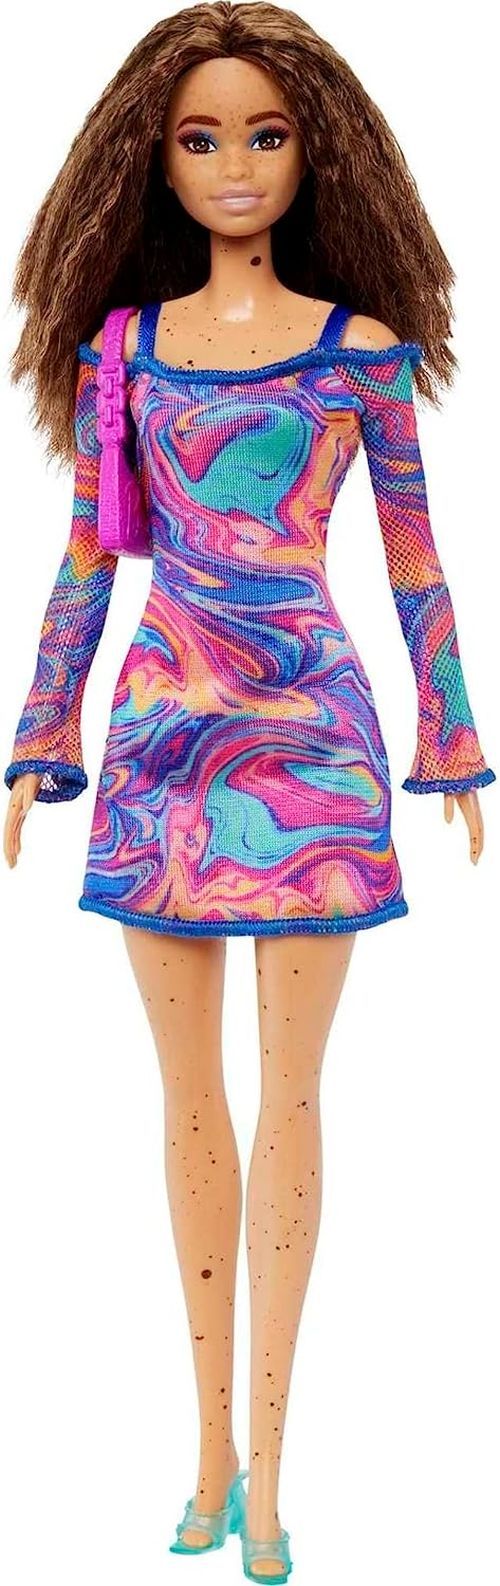 MATTEL Barbie In Swirled Color Dress - .